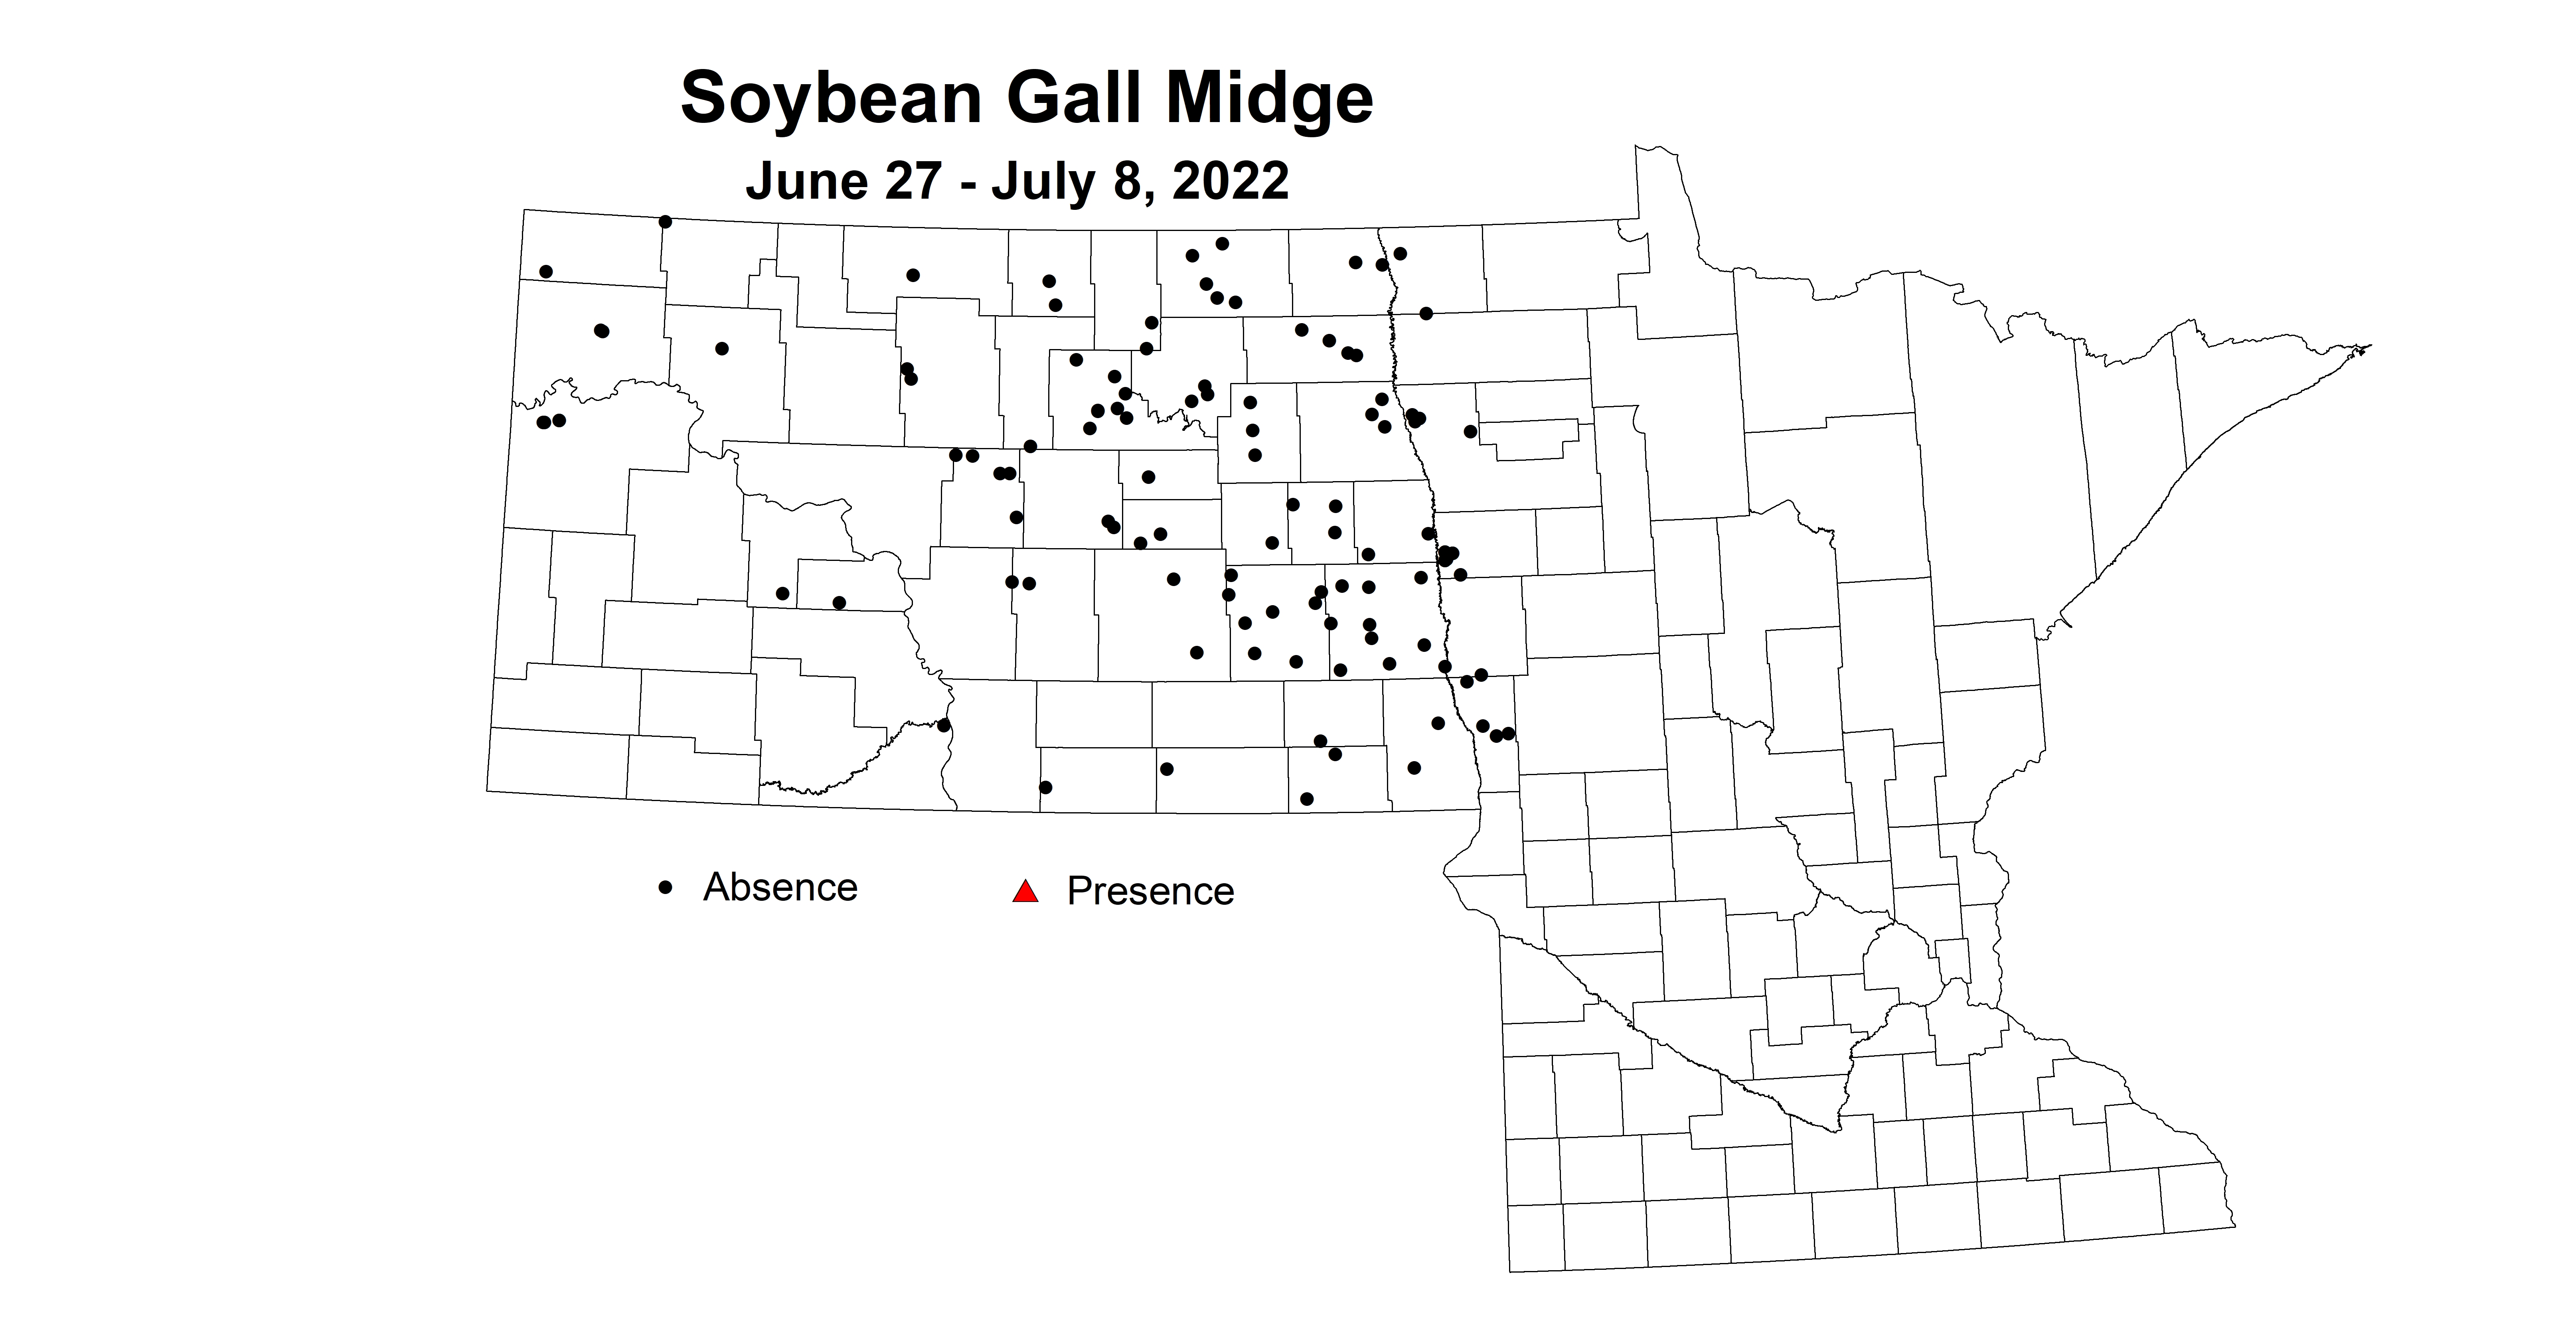 soybean gall midge 2022 6.27-7.8